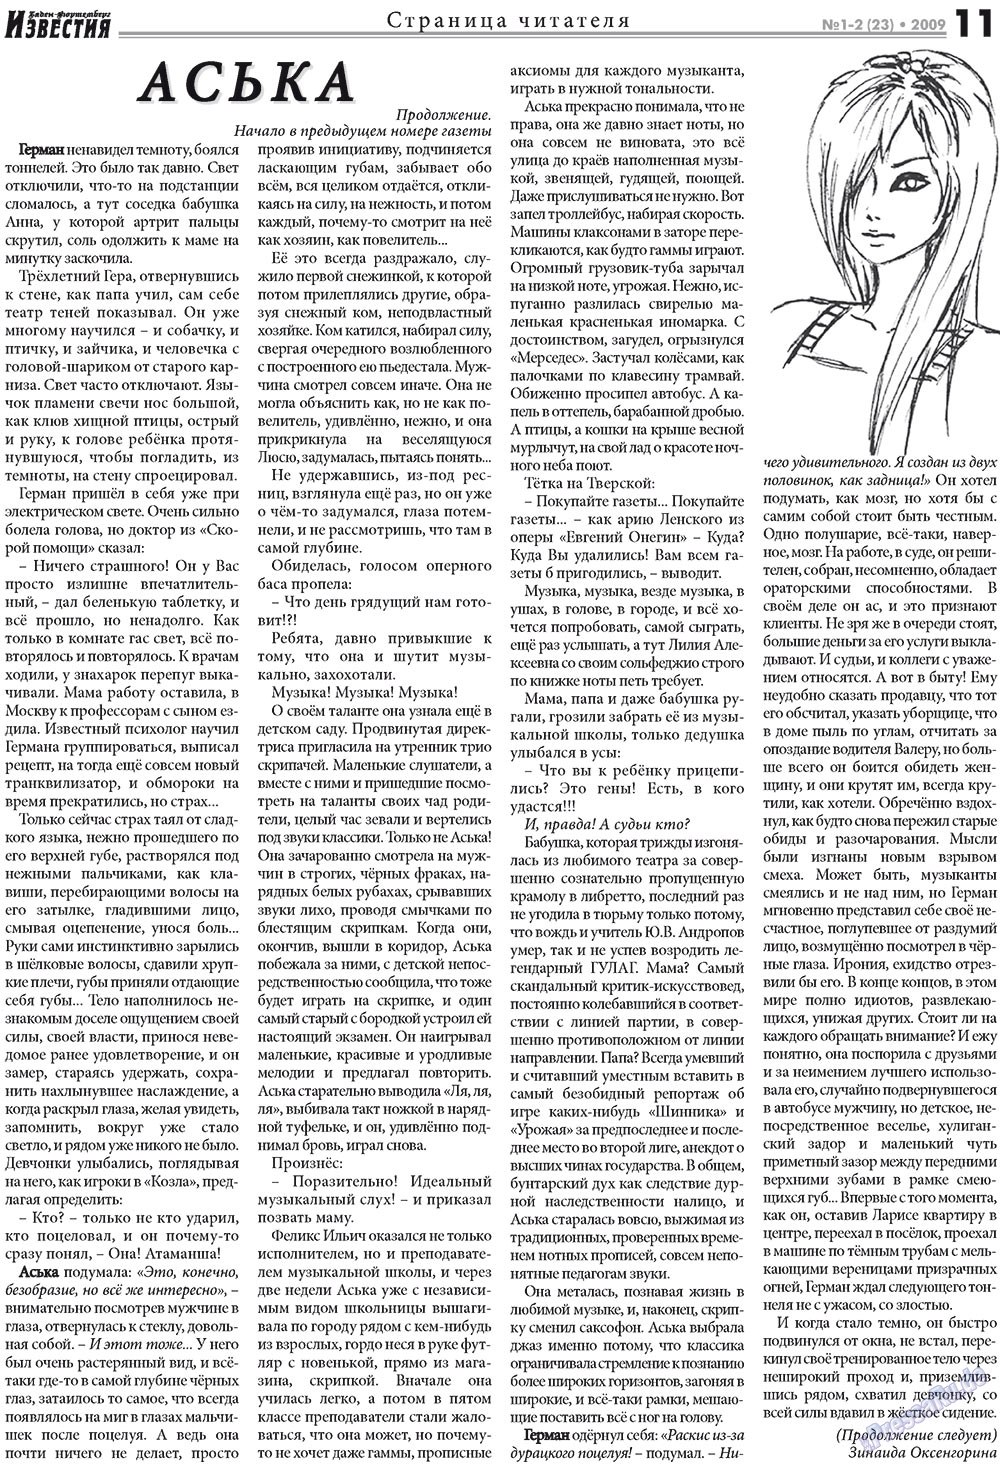 Известия BW (газета). 2009 год, номер 1, стр. 11